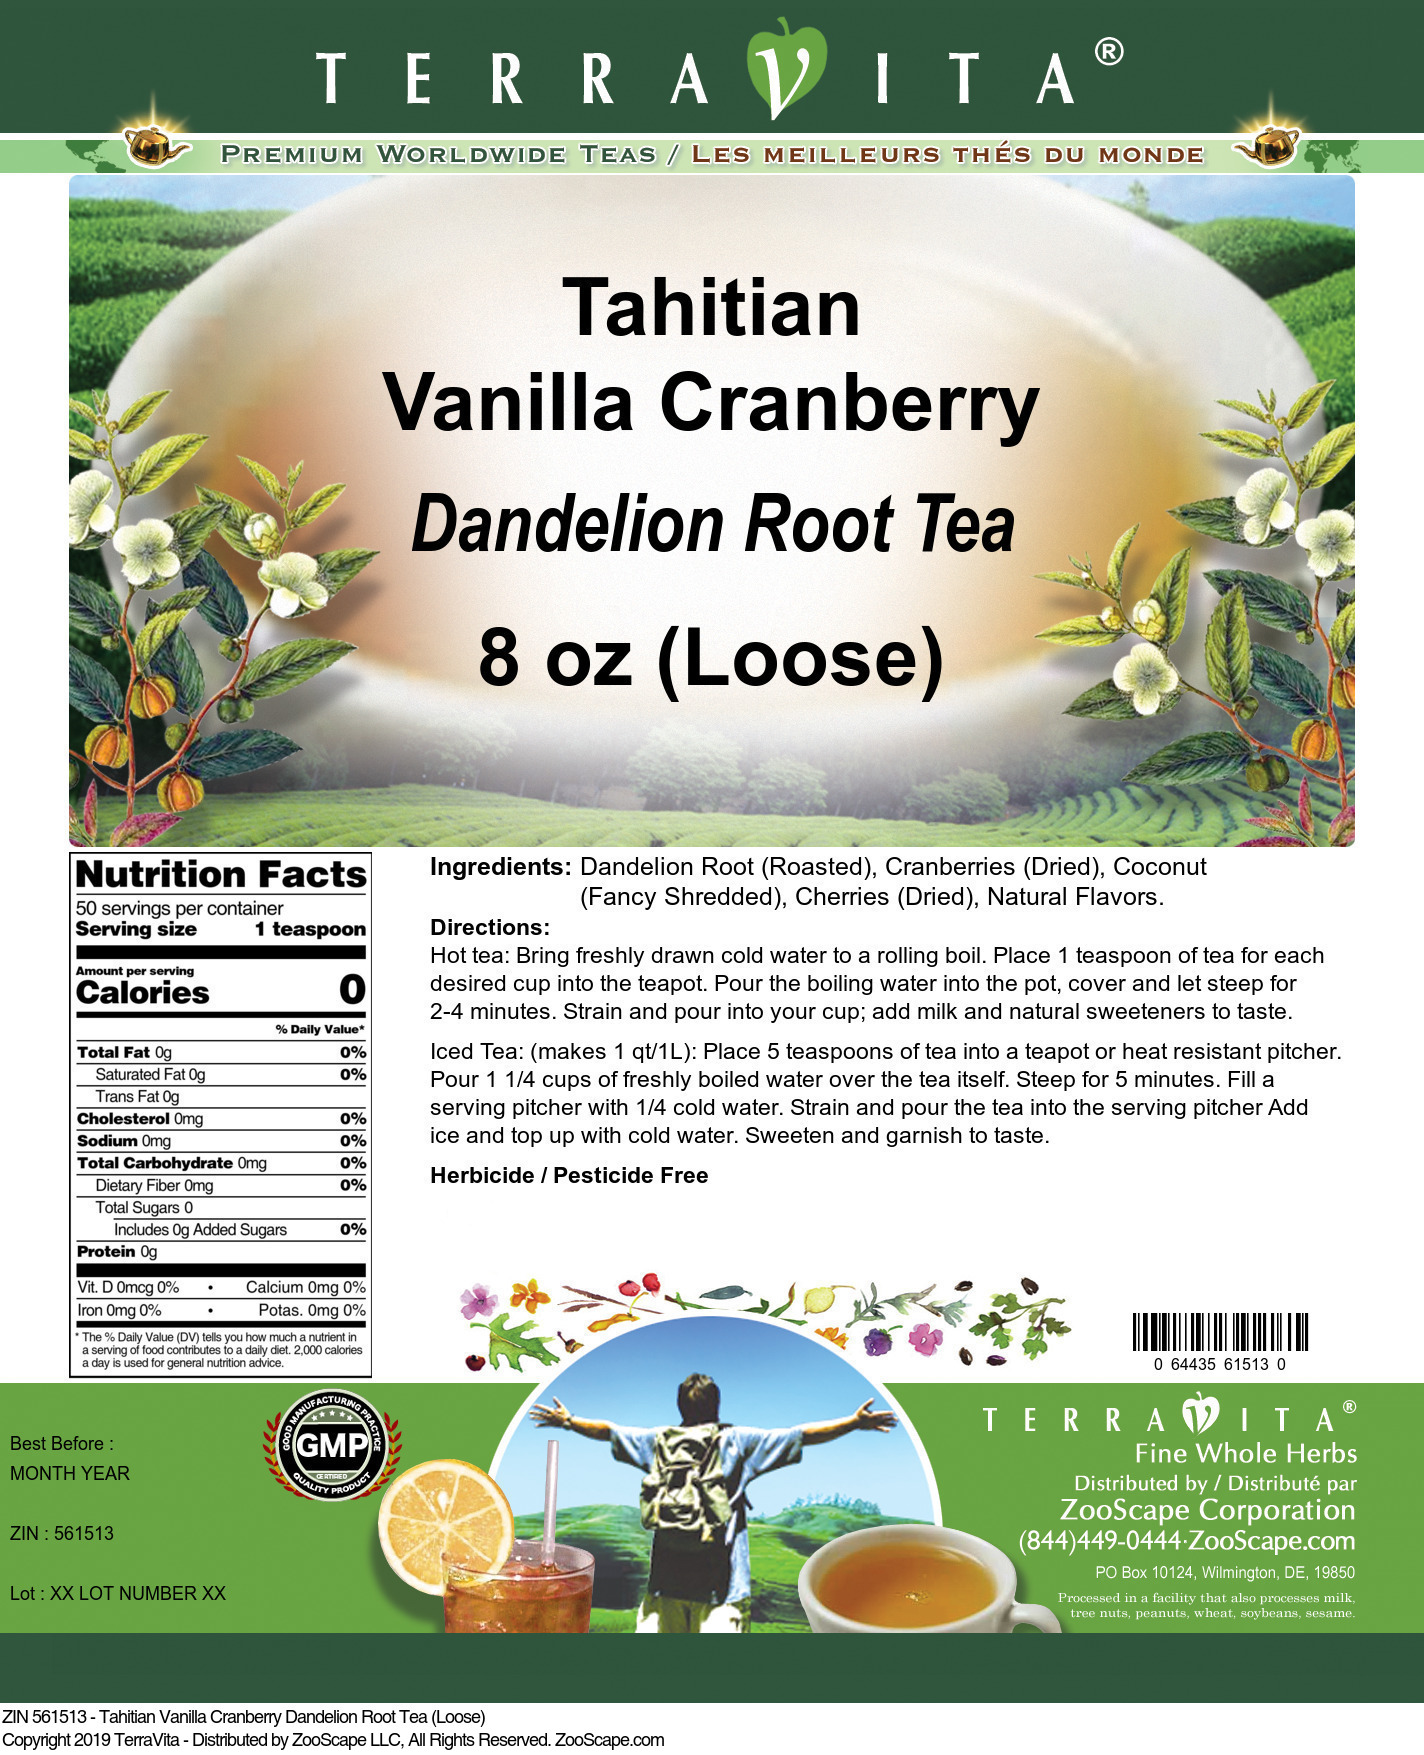 Tahitian Vanilla Cranberry Dandelion Root Tea (Loose) - Label